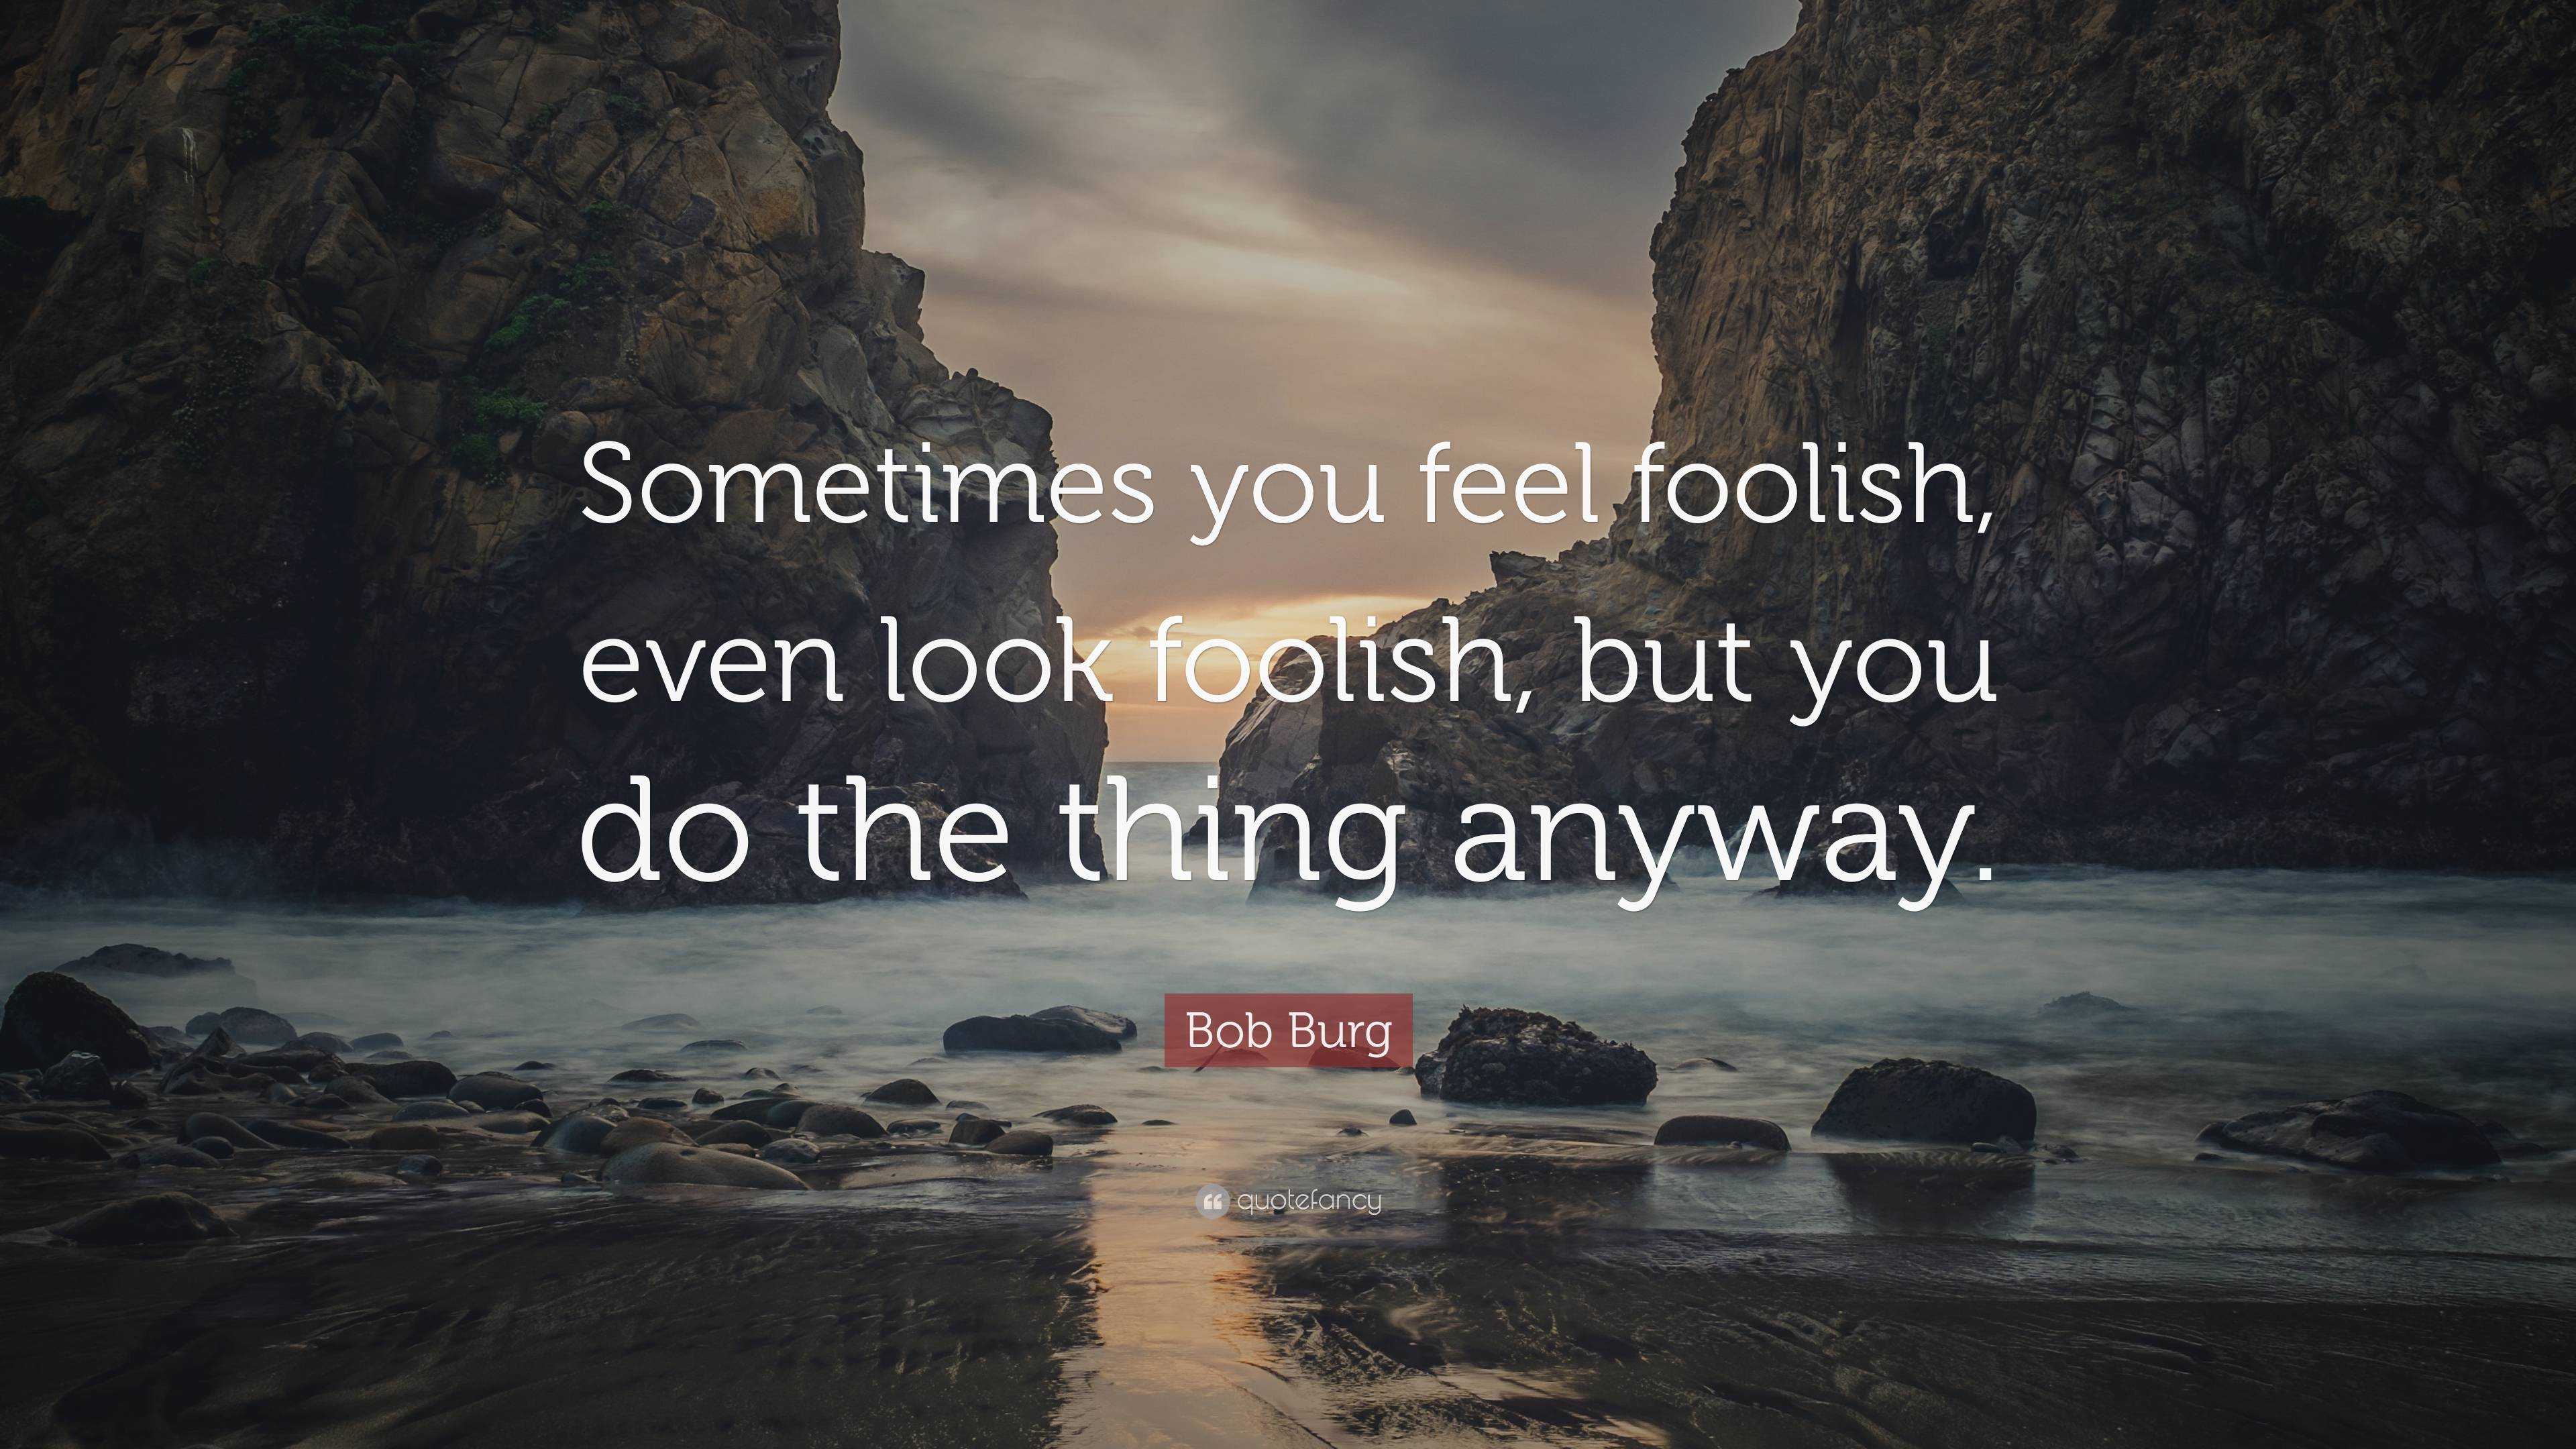 Bob Burg Quote: “Sometimes you feel foolish, even look foolish, but you ...